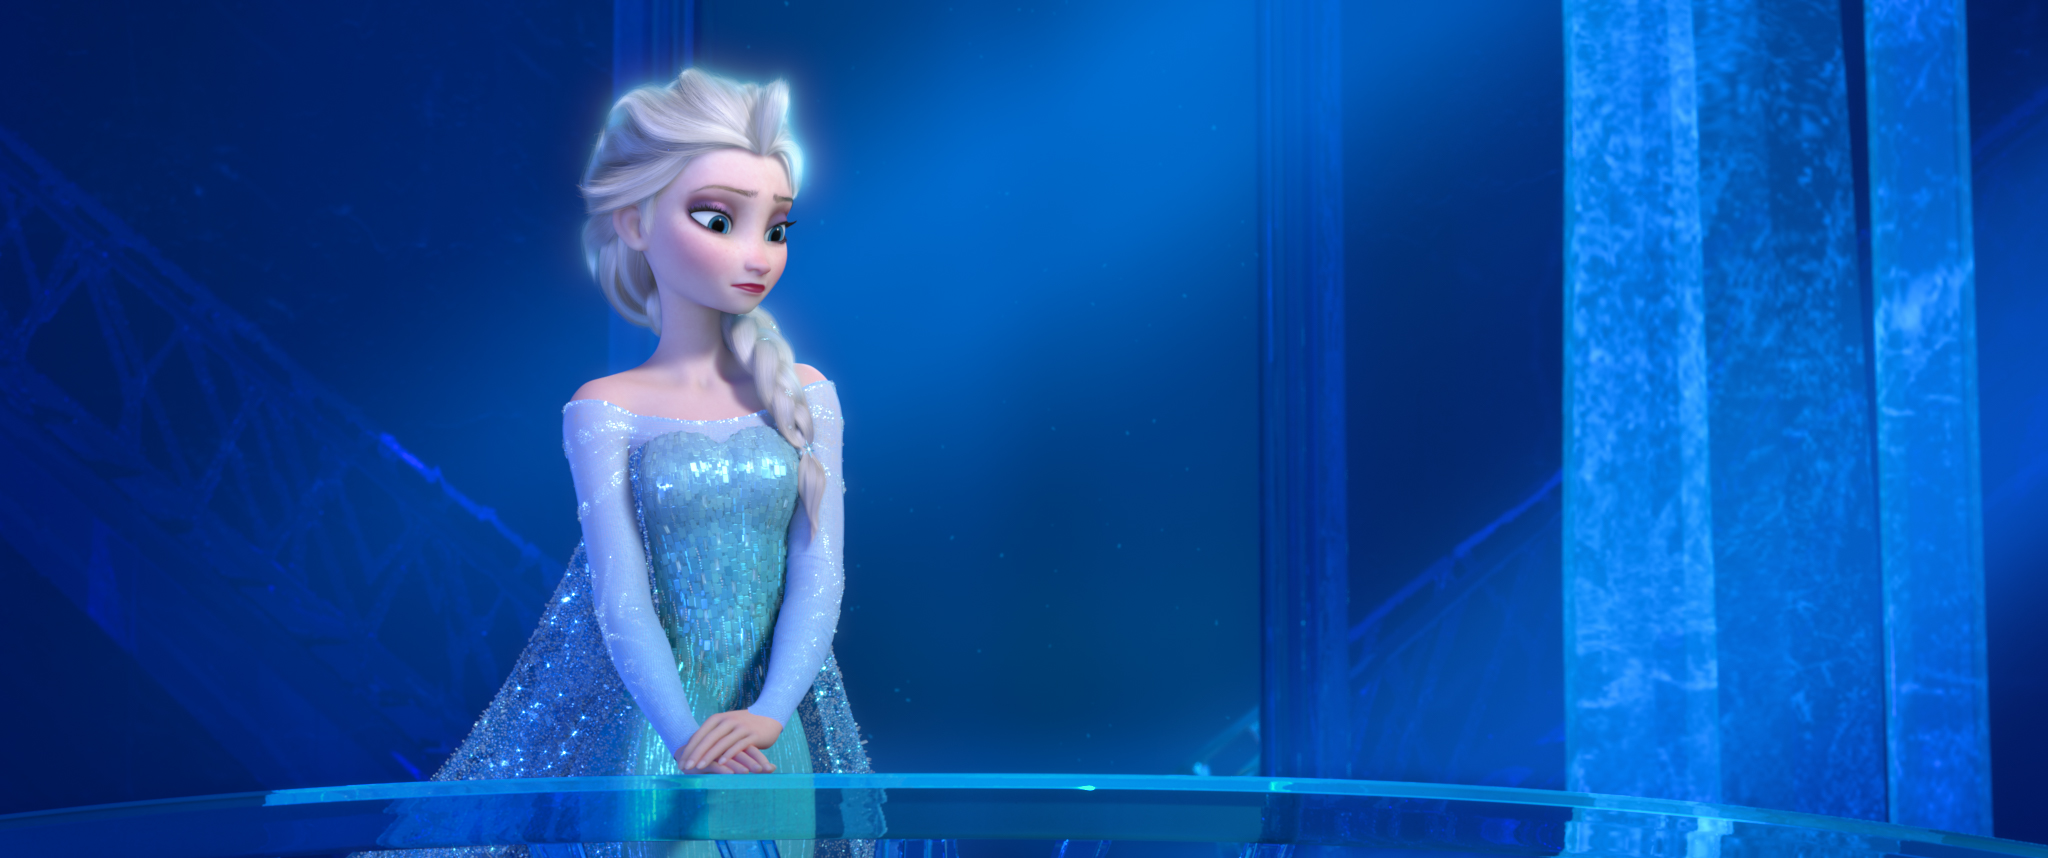 Twitter Users Demands That Disney Give Elsa A Girlfriend In Frozen 2